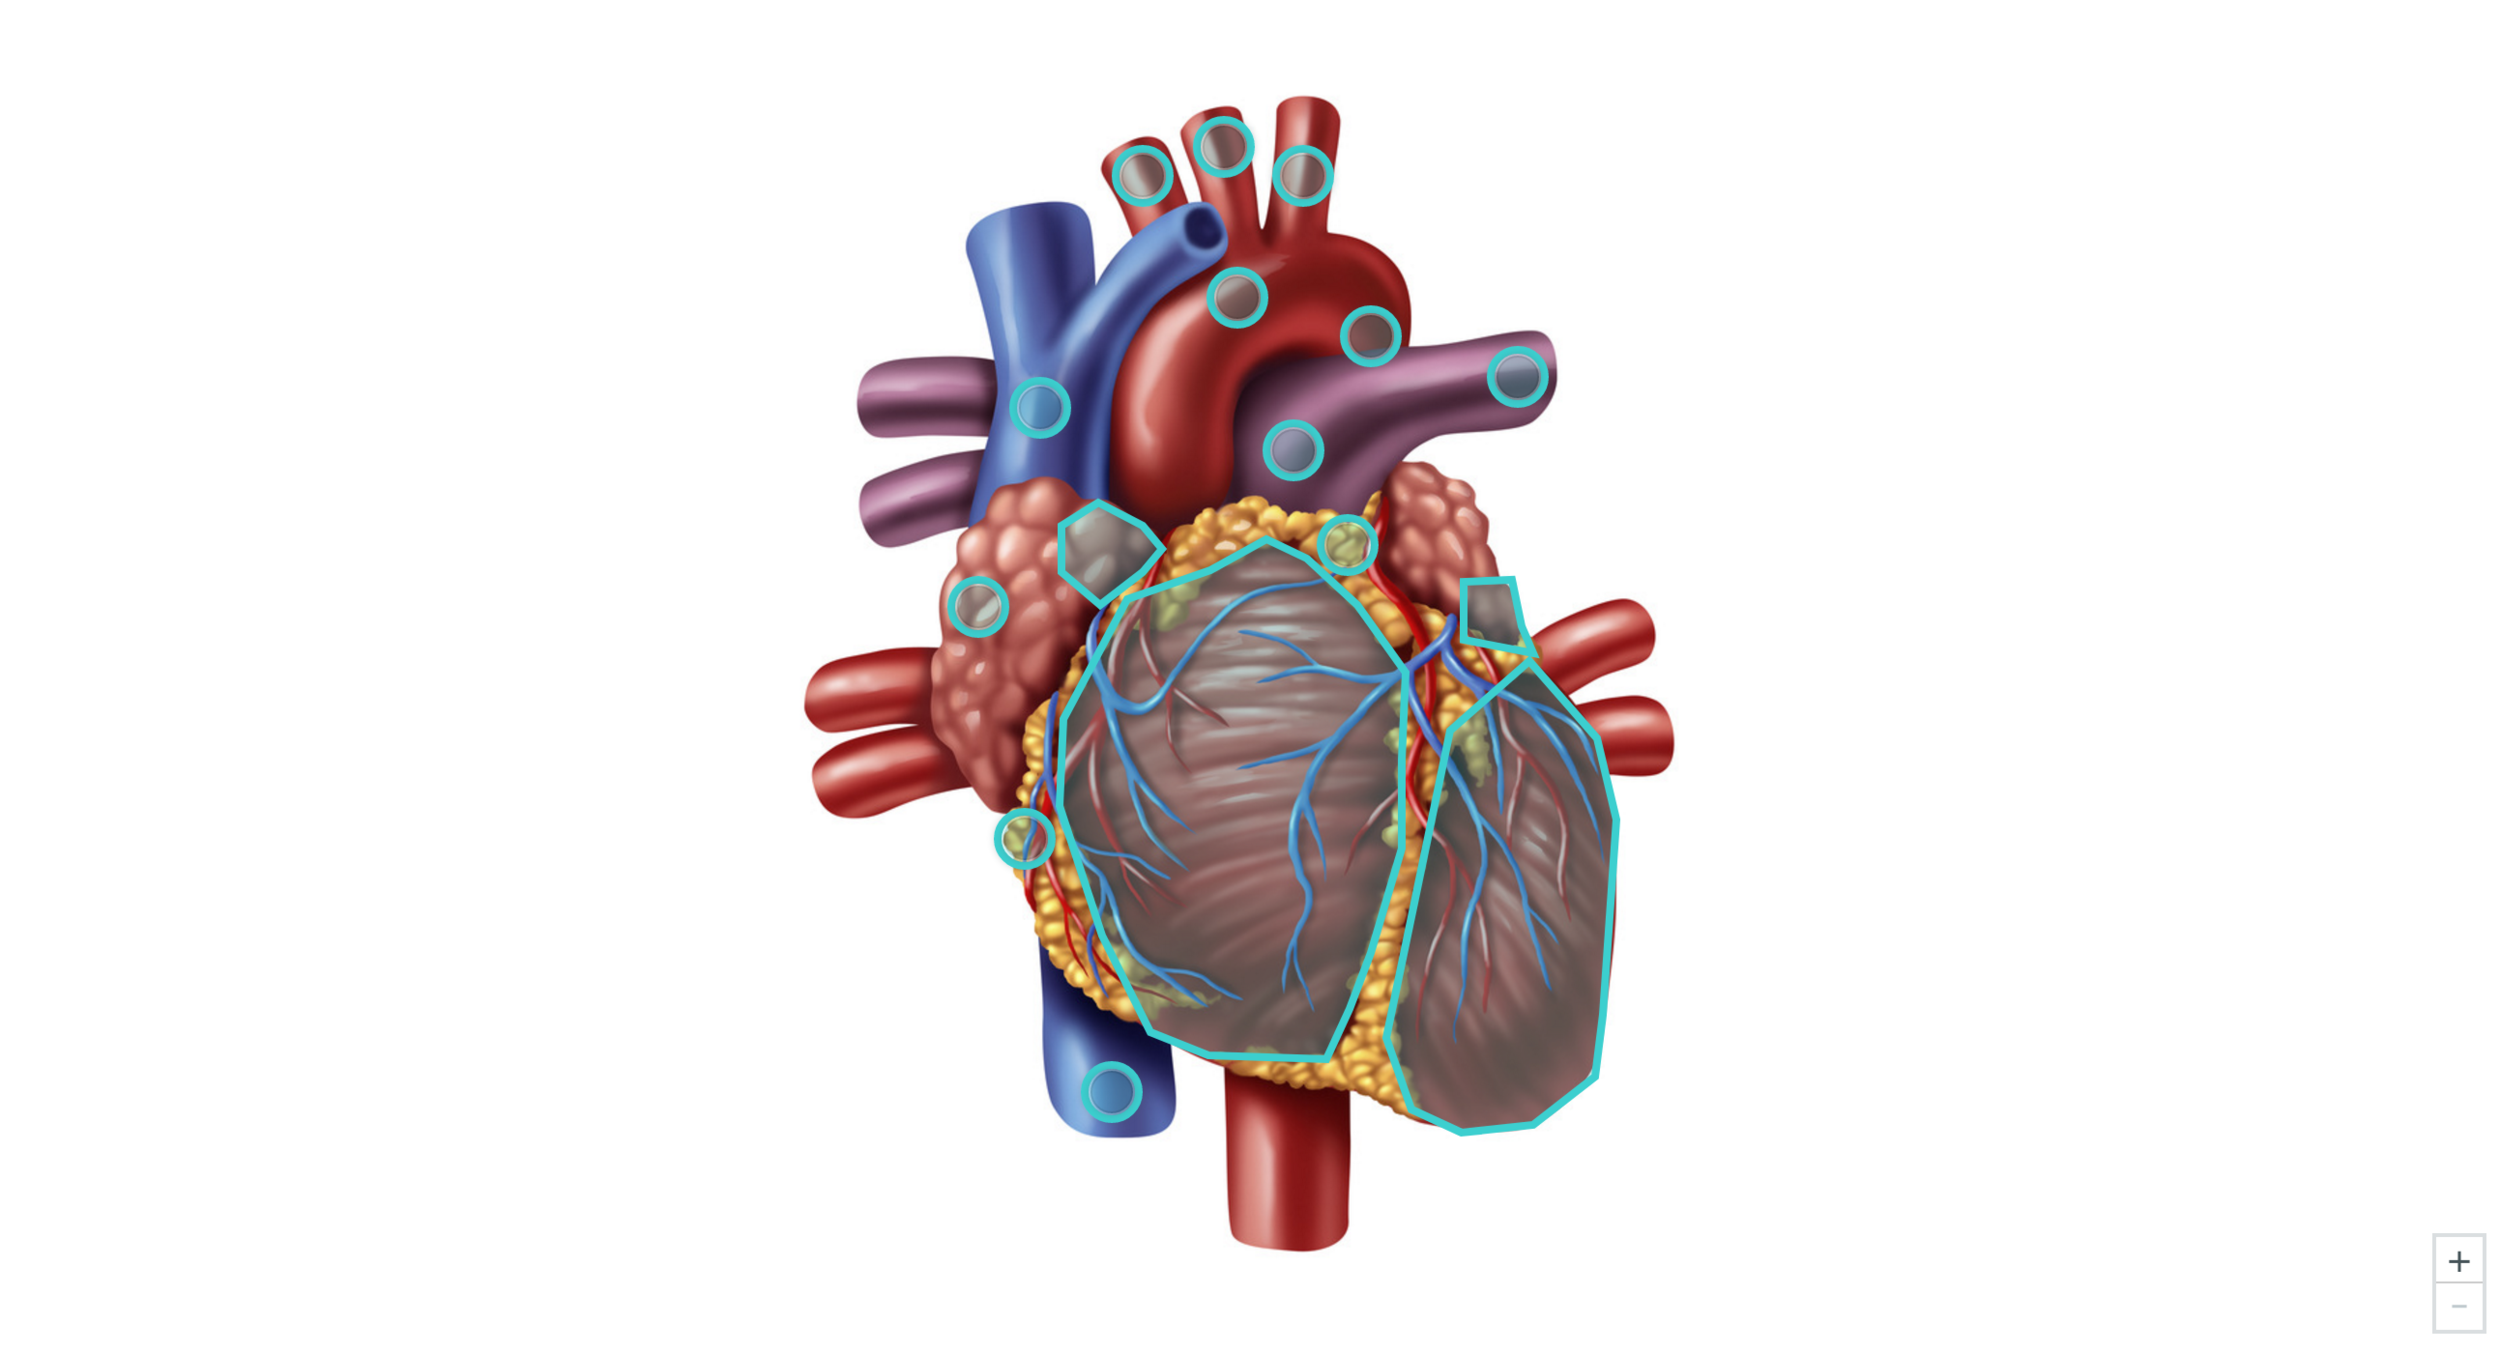 Anatomy of the Heart